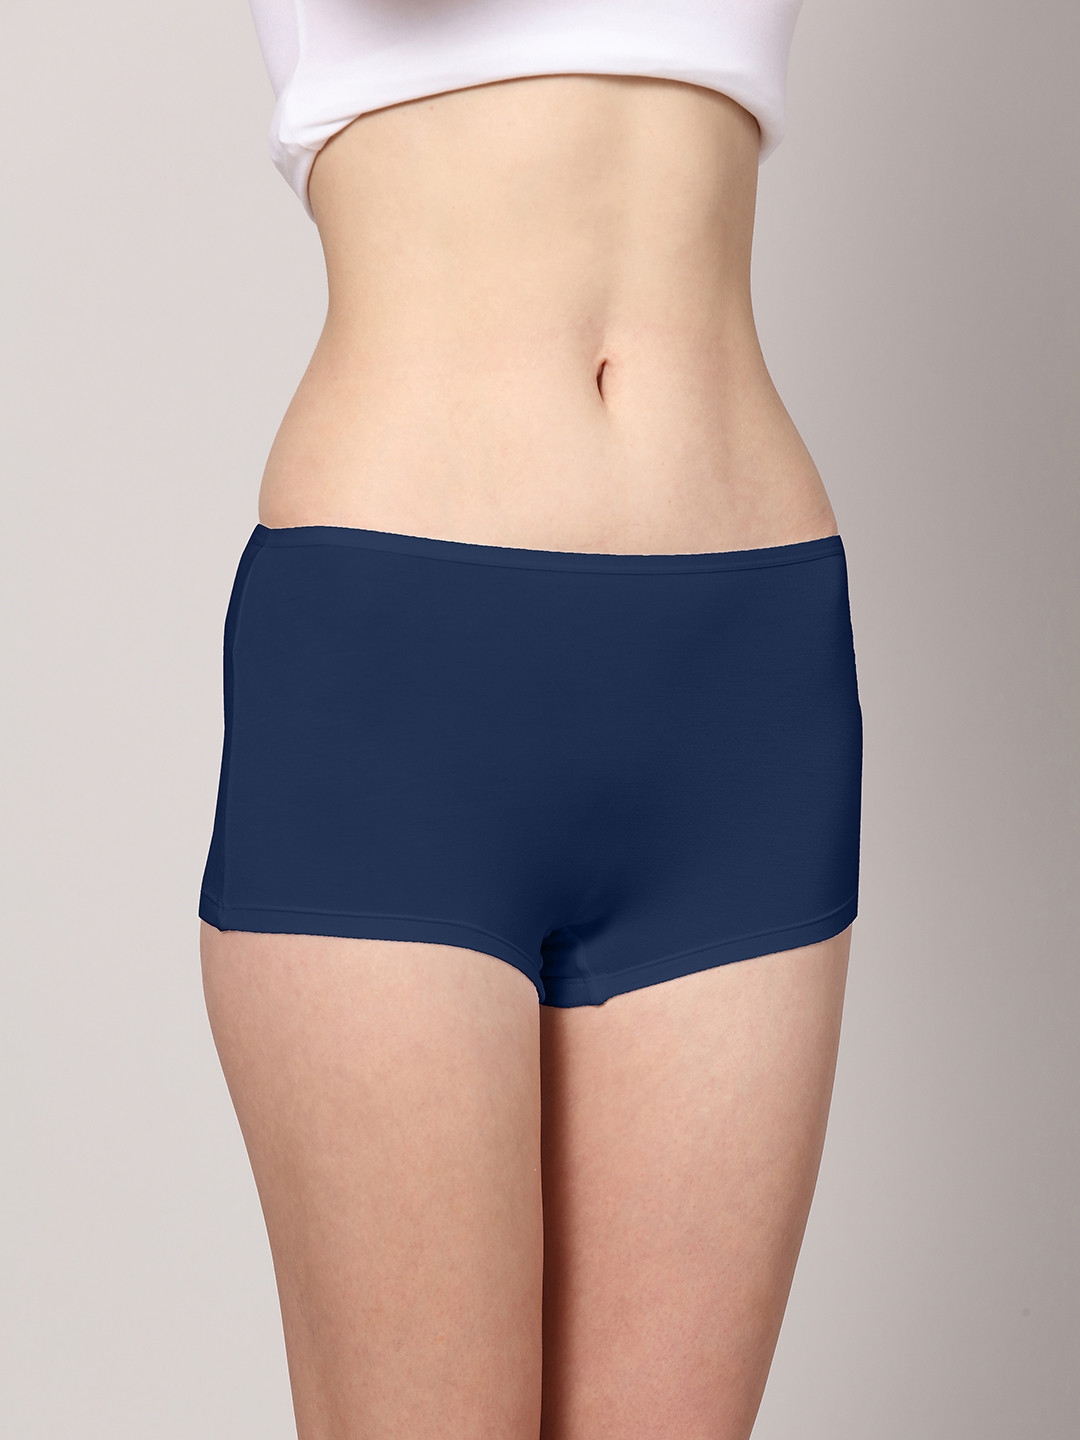 AshleyandAlvis | AshleyandAlvis Women's Panties Micro Modal, Anti Bacterial, Skinny Soft, Premium Boyshorts -No Itching, Sweat Proof, Double In-seam Gusset 2